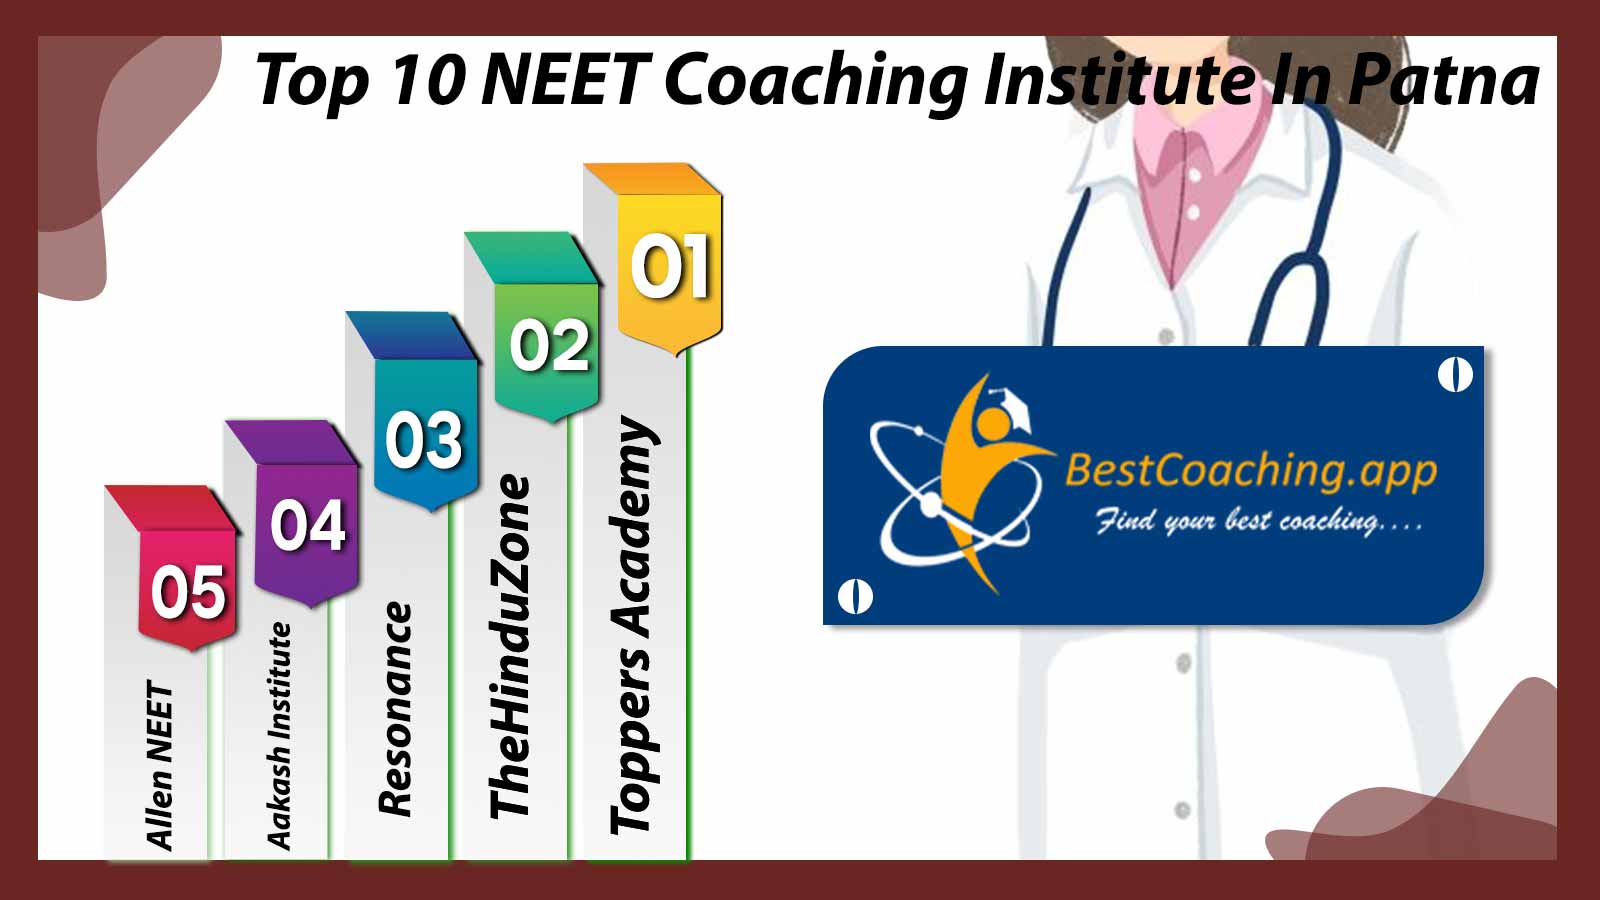 Top 10 NEET Coaching Institute In Patna